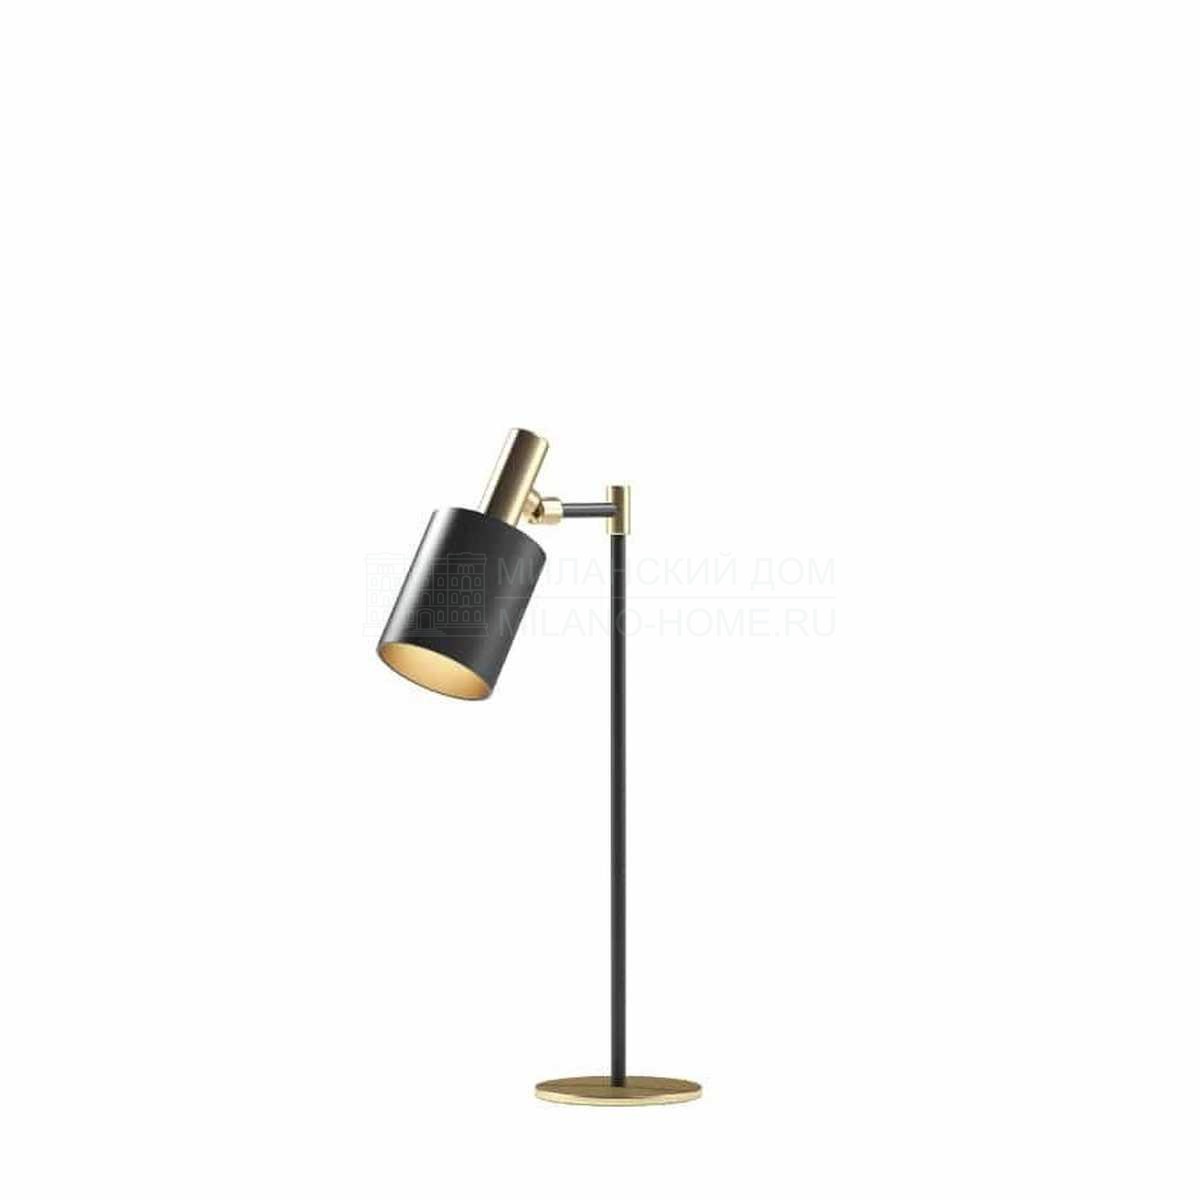 Настольная лампа Musa B table lamp из Италии фабрики CAPITAL Collection